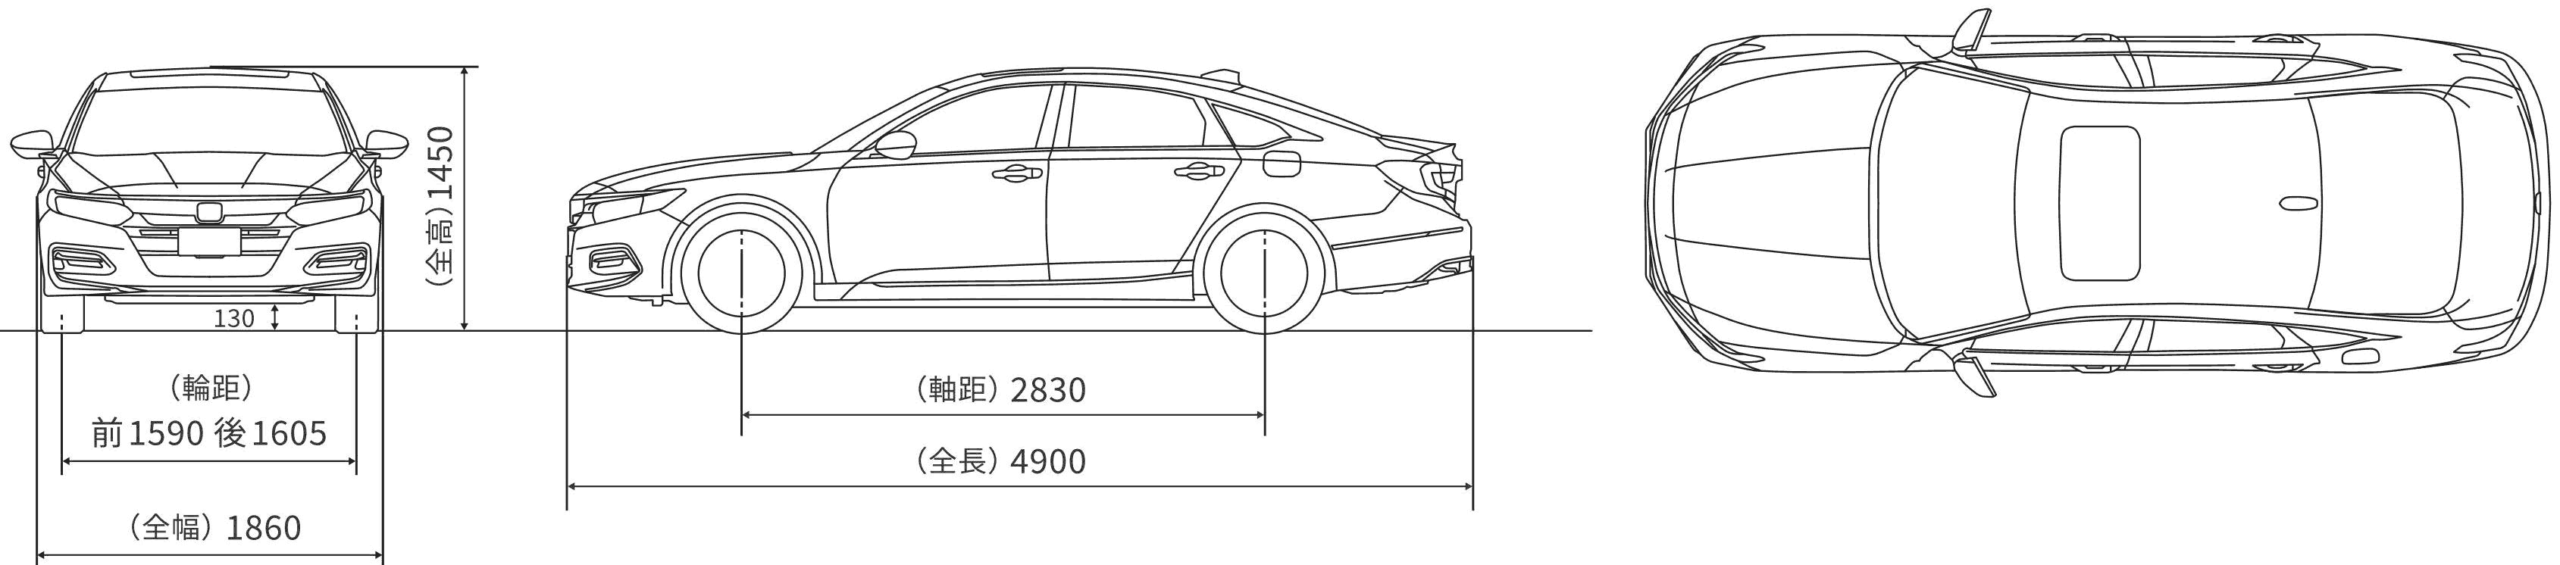 Honda Accord blueprint